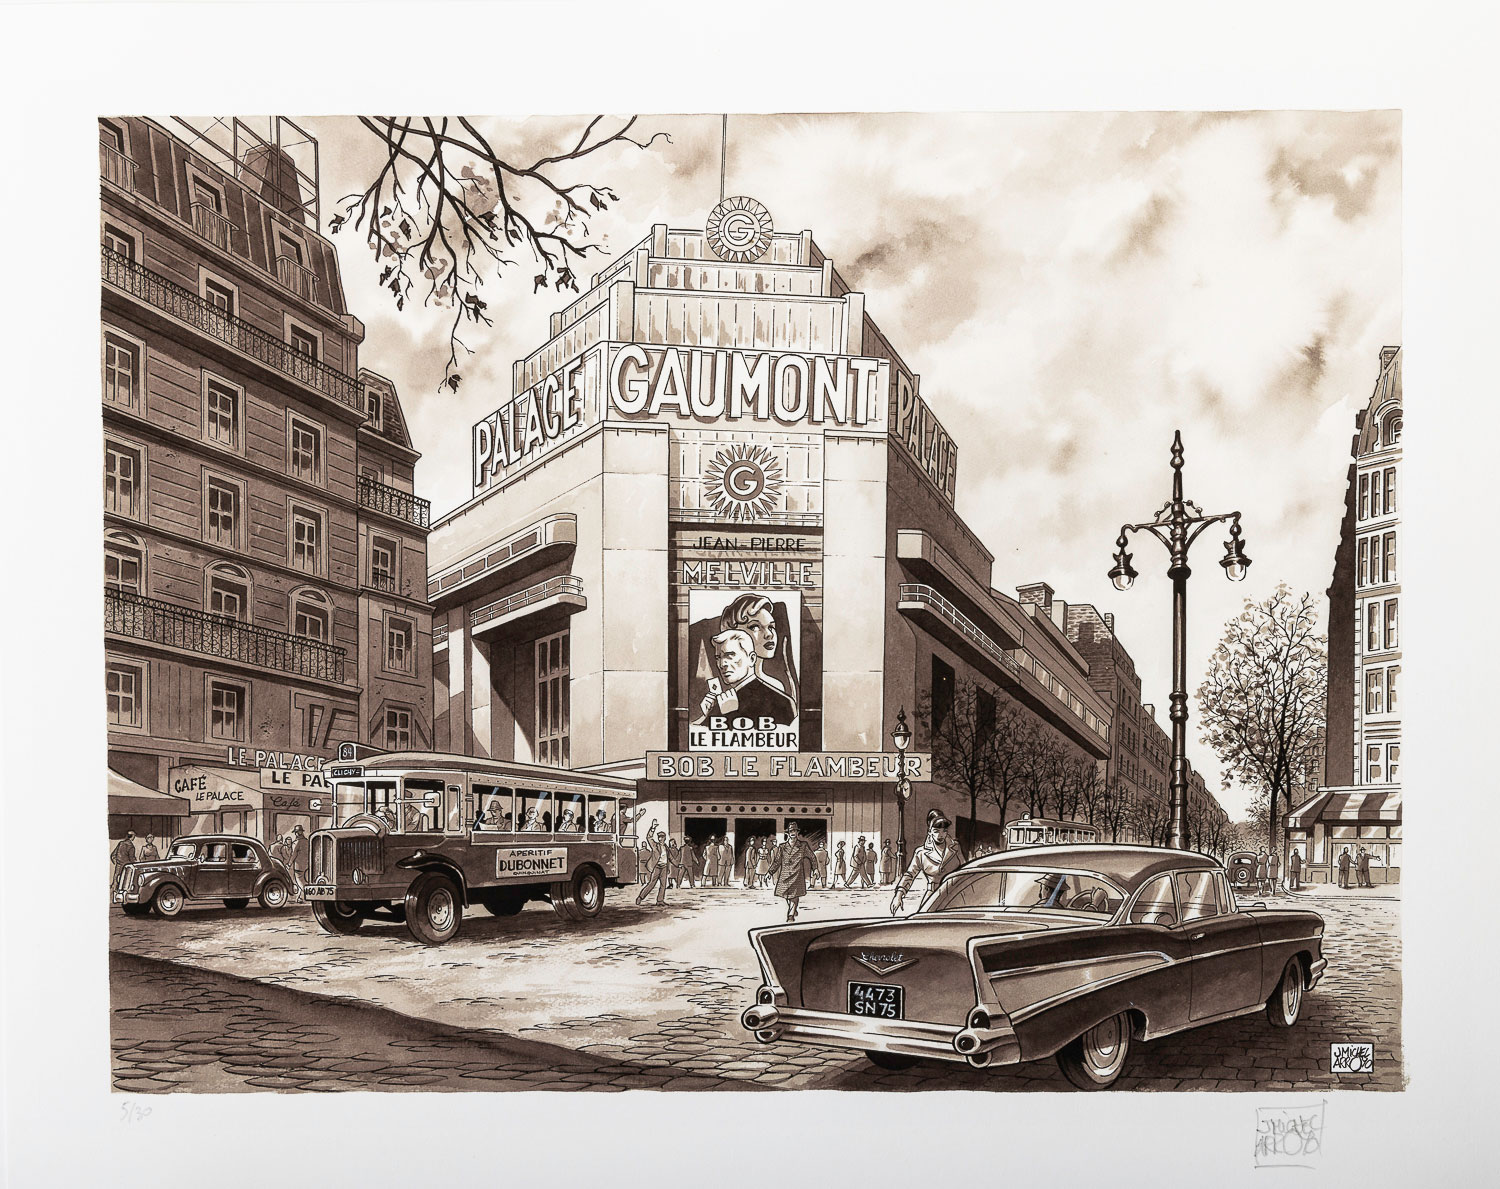 Estampe Pigmentaire signée Jean-Michel Arroyo : Gaumont Palace - Estampe